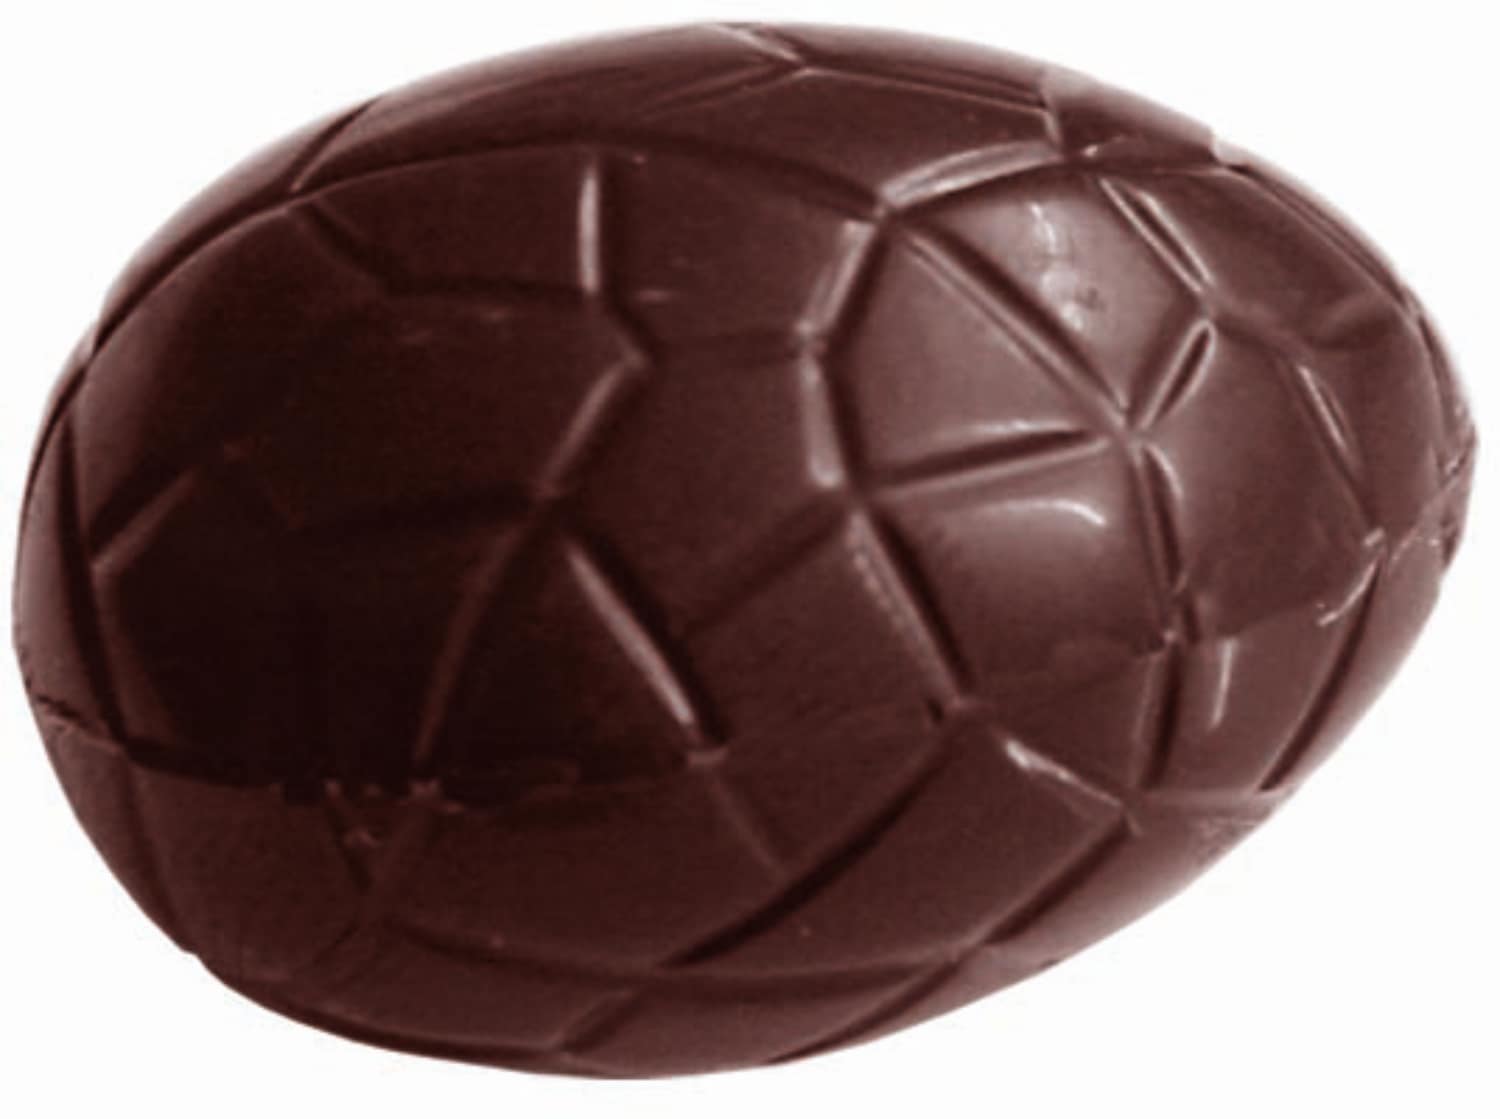 Schokoladenform "Osterei" 421537